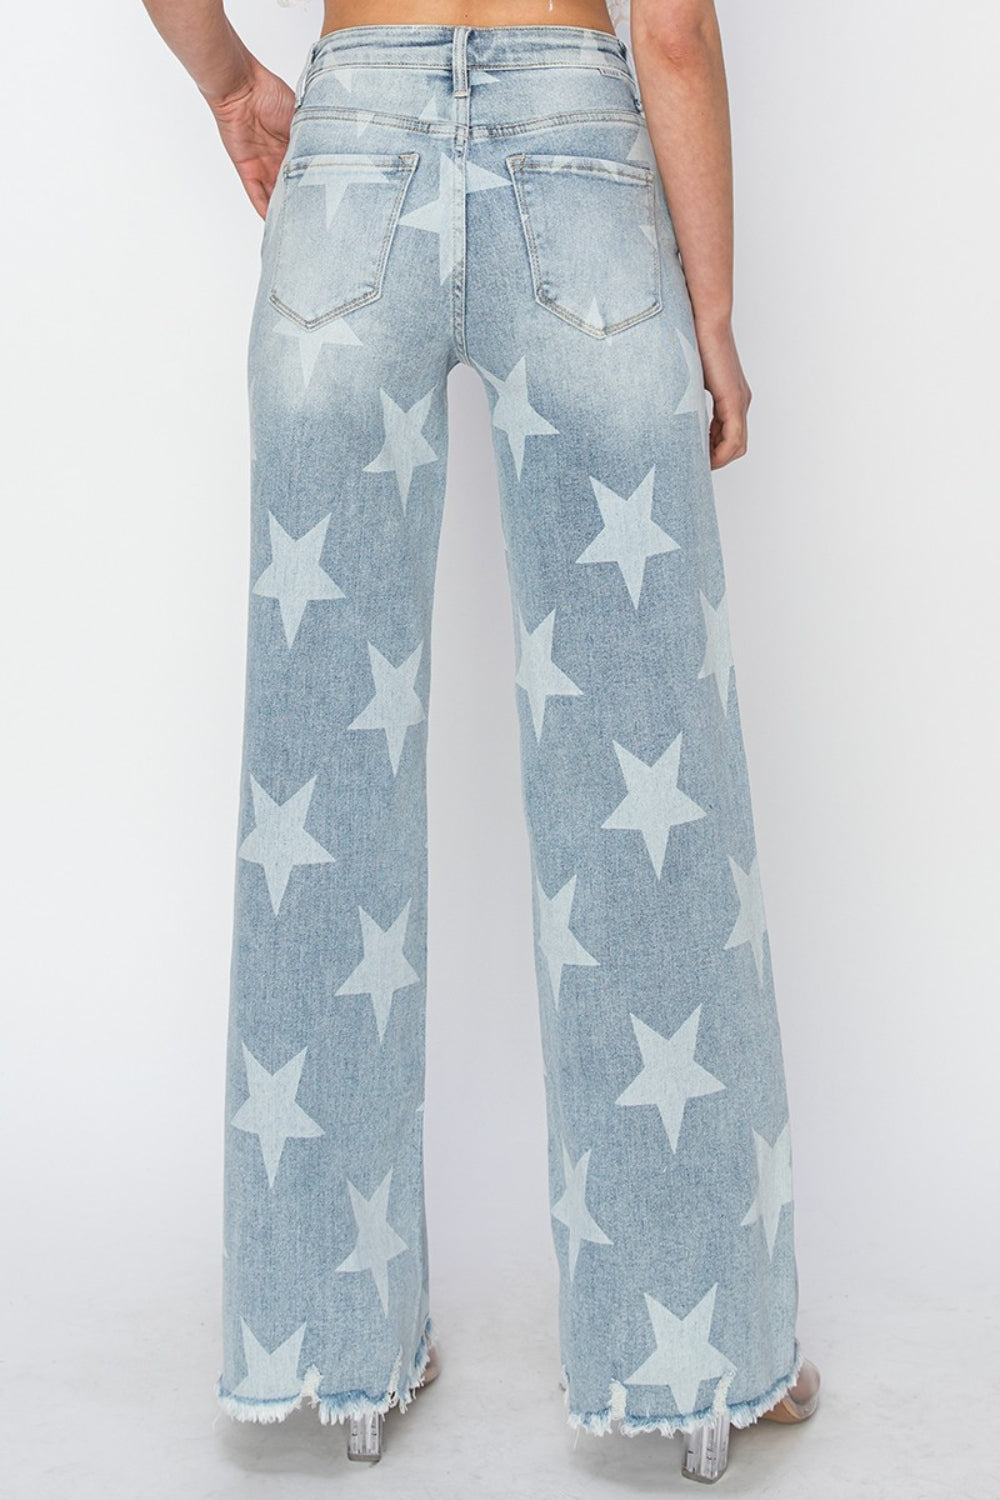 RISEN Full Size Raw Hem Star Wide Leg Jeans - The Teal Antler Boutique